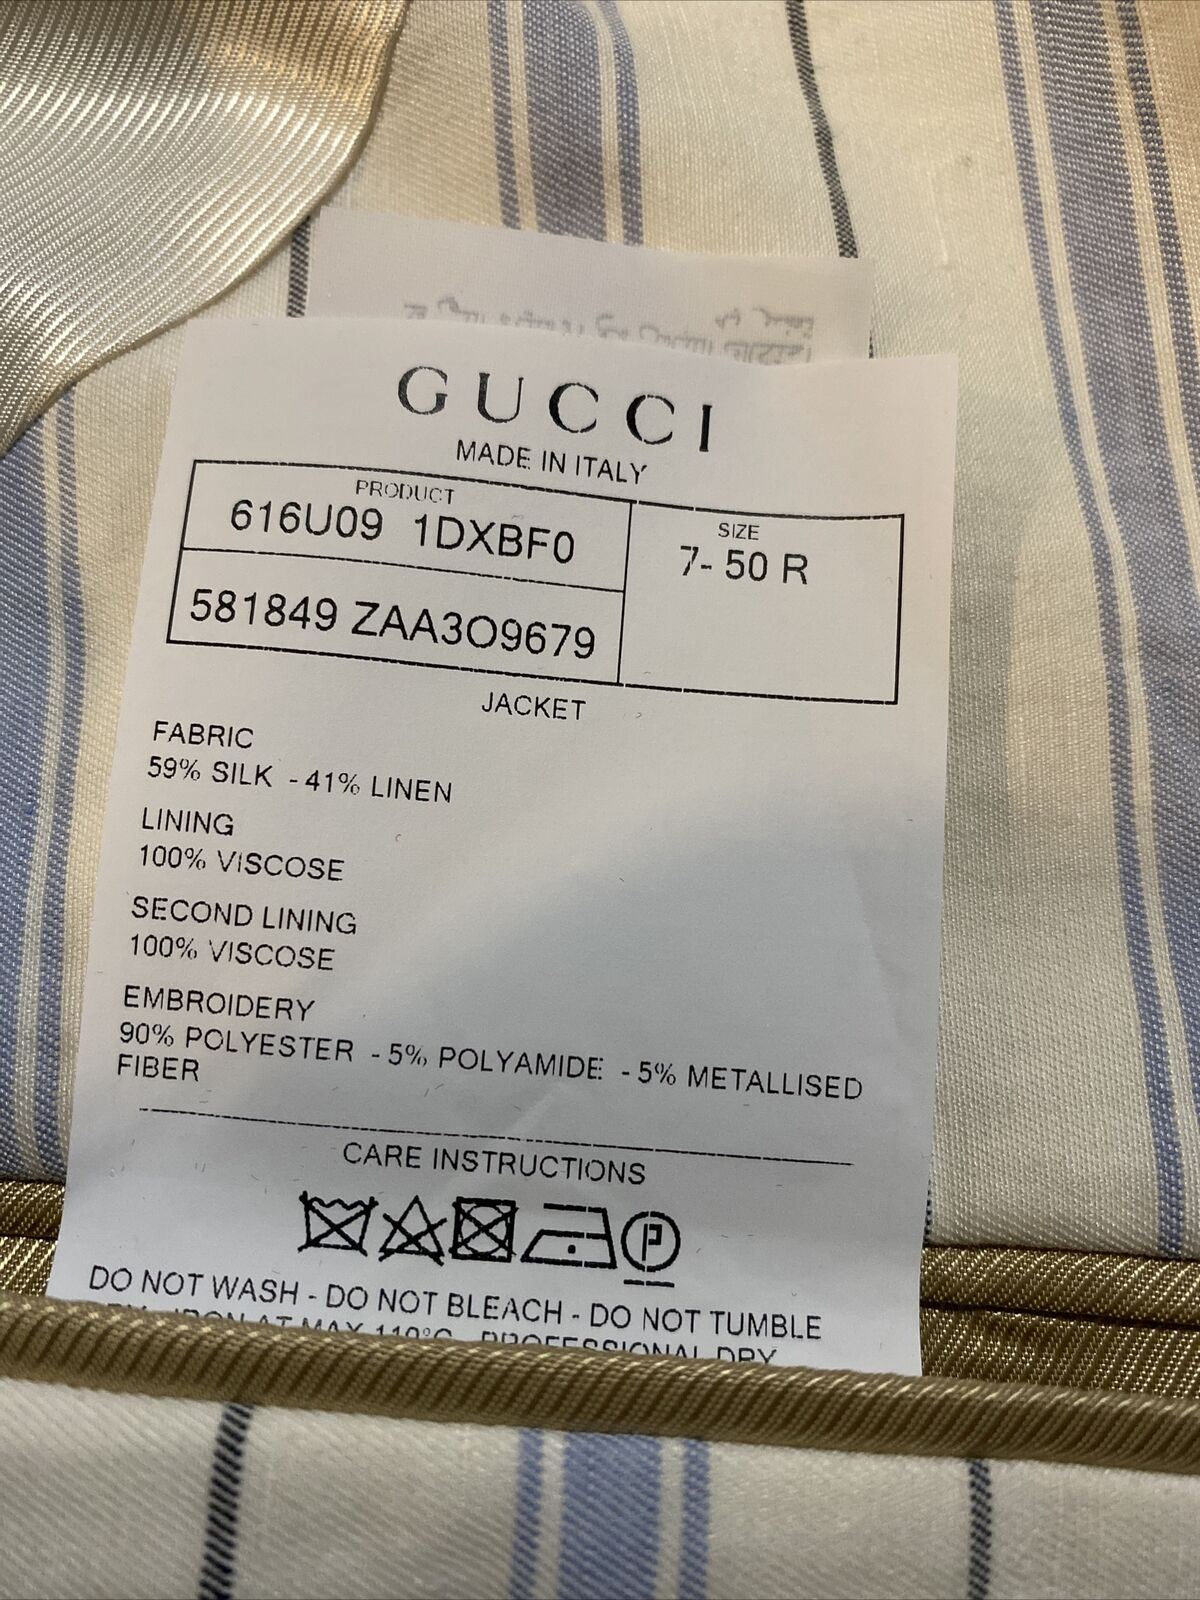 Neu mit Etikett: 2900 $ Gucci Herren-Sportmantel, Jacke, Blazer, Weiß/Blau, 40R US (50R Eu)